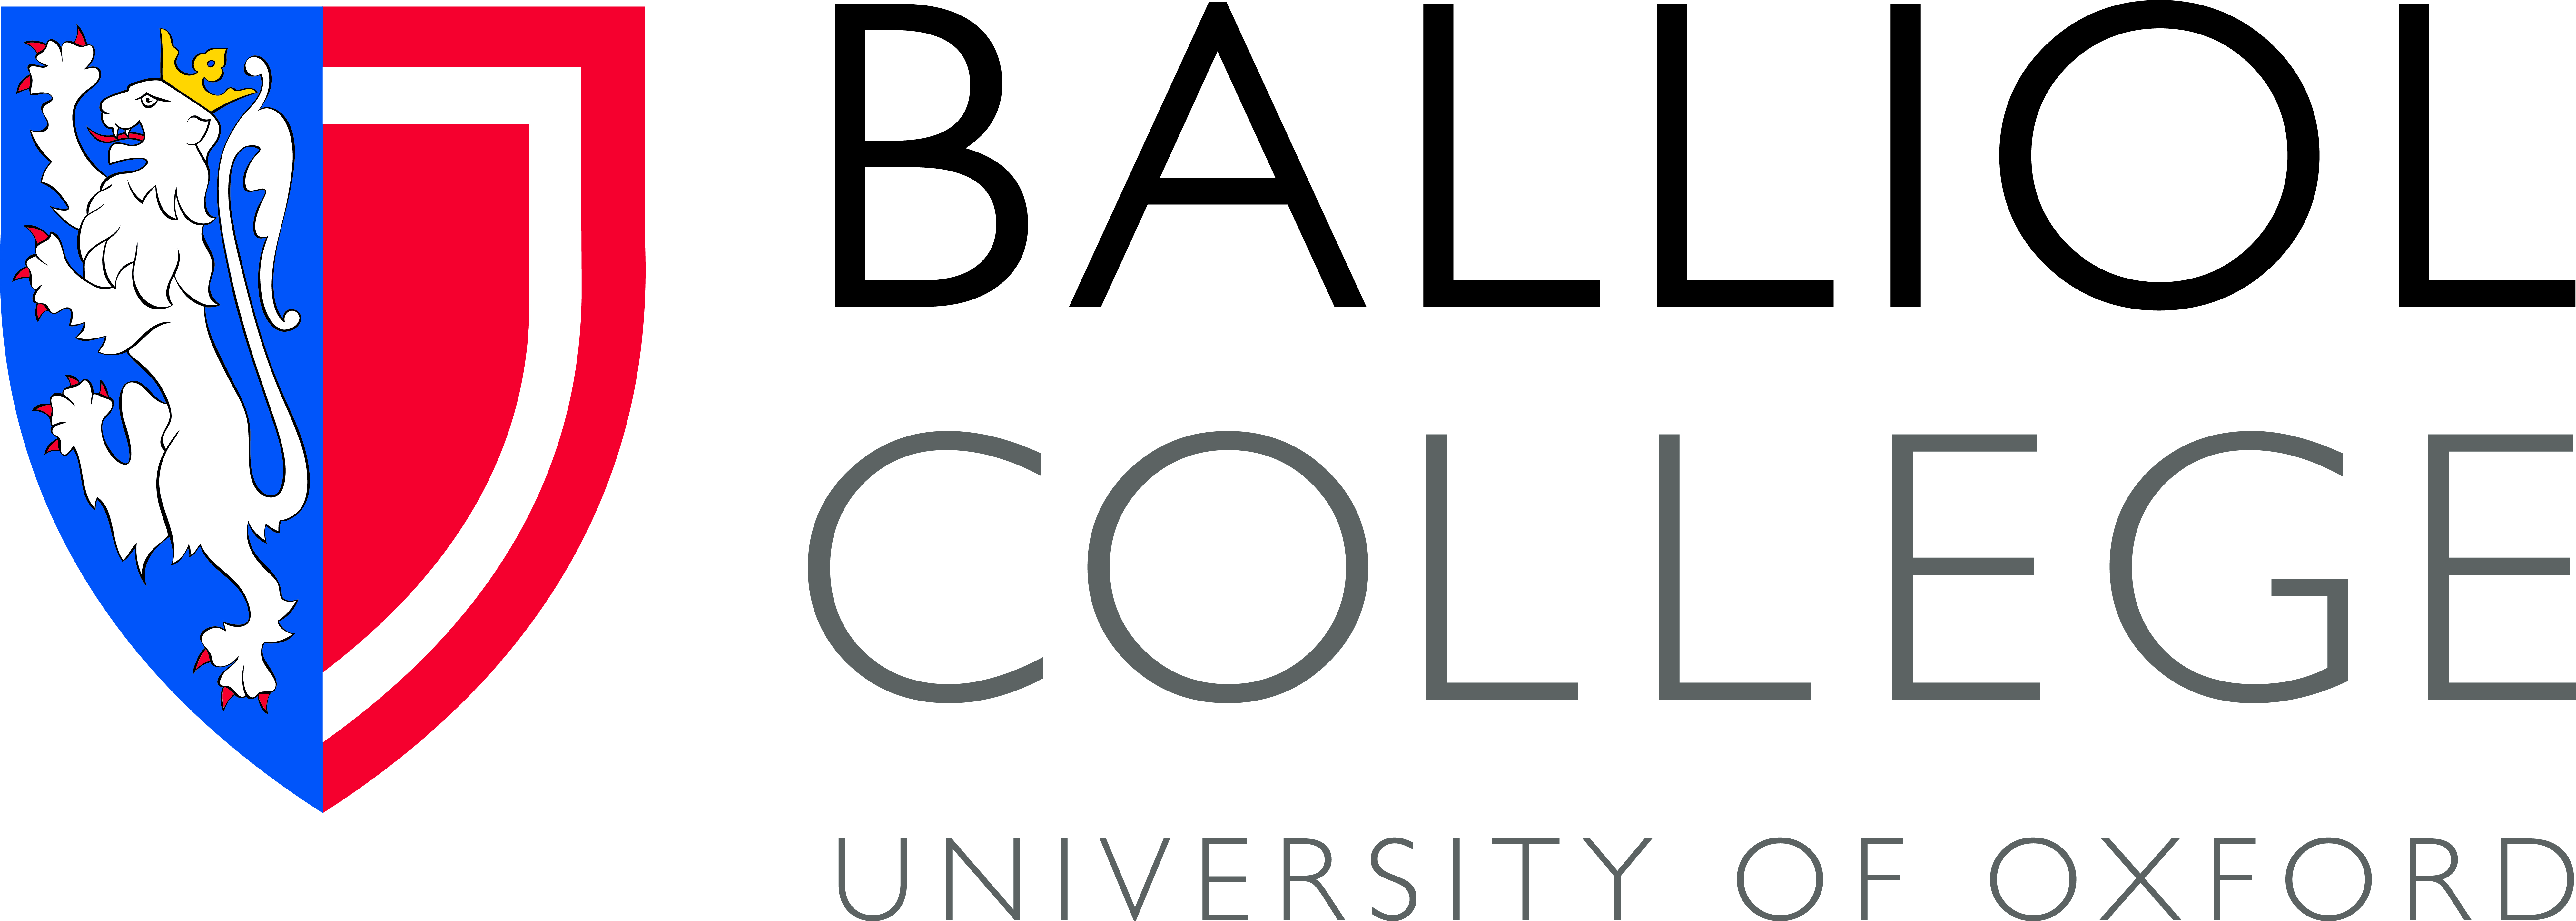 logo for Balliol College